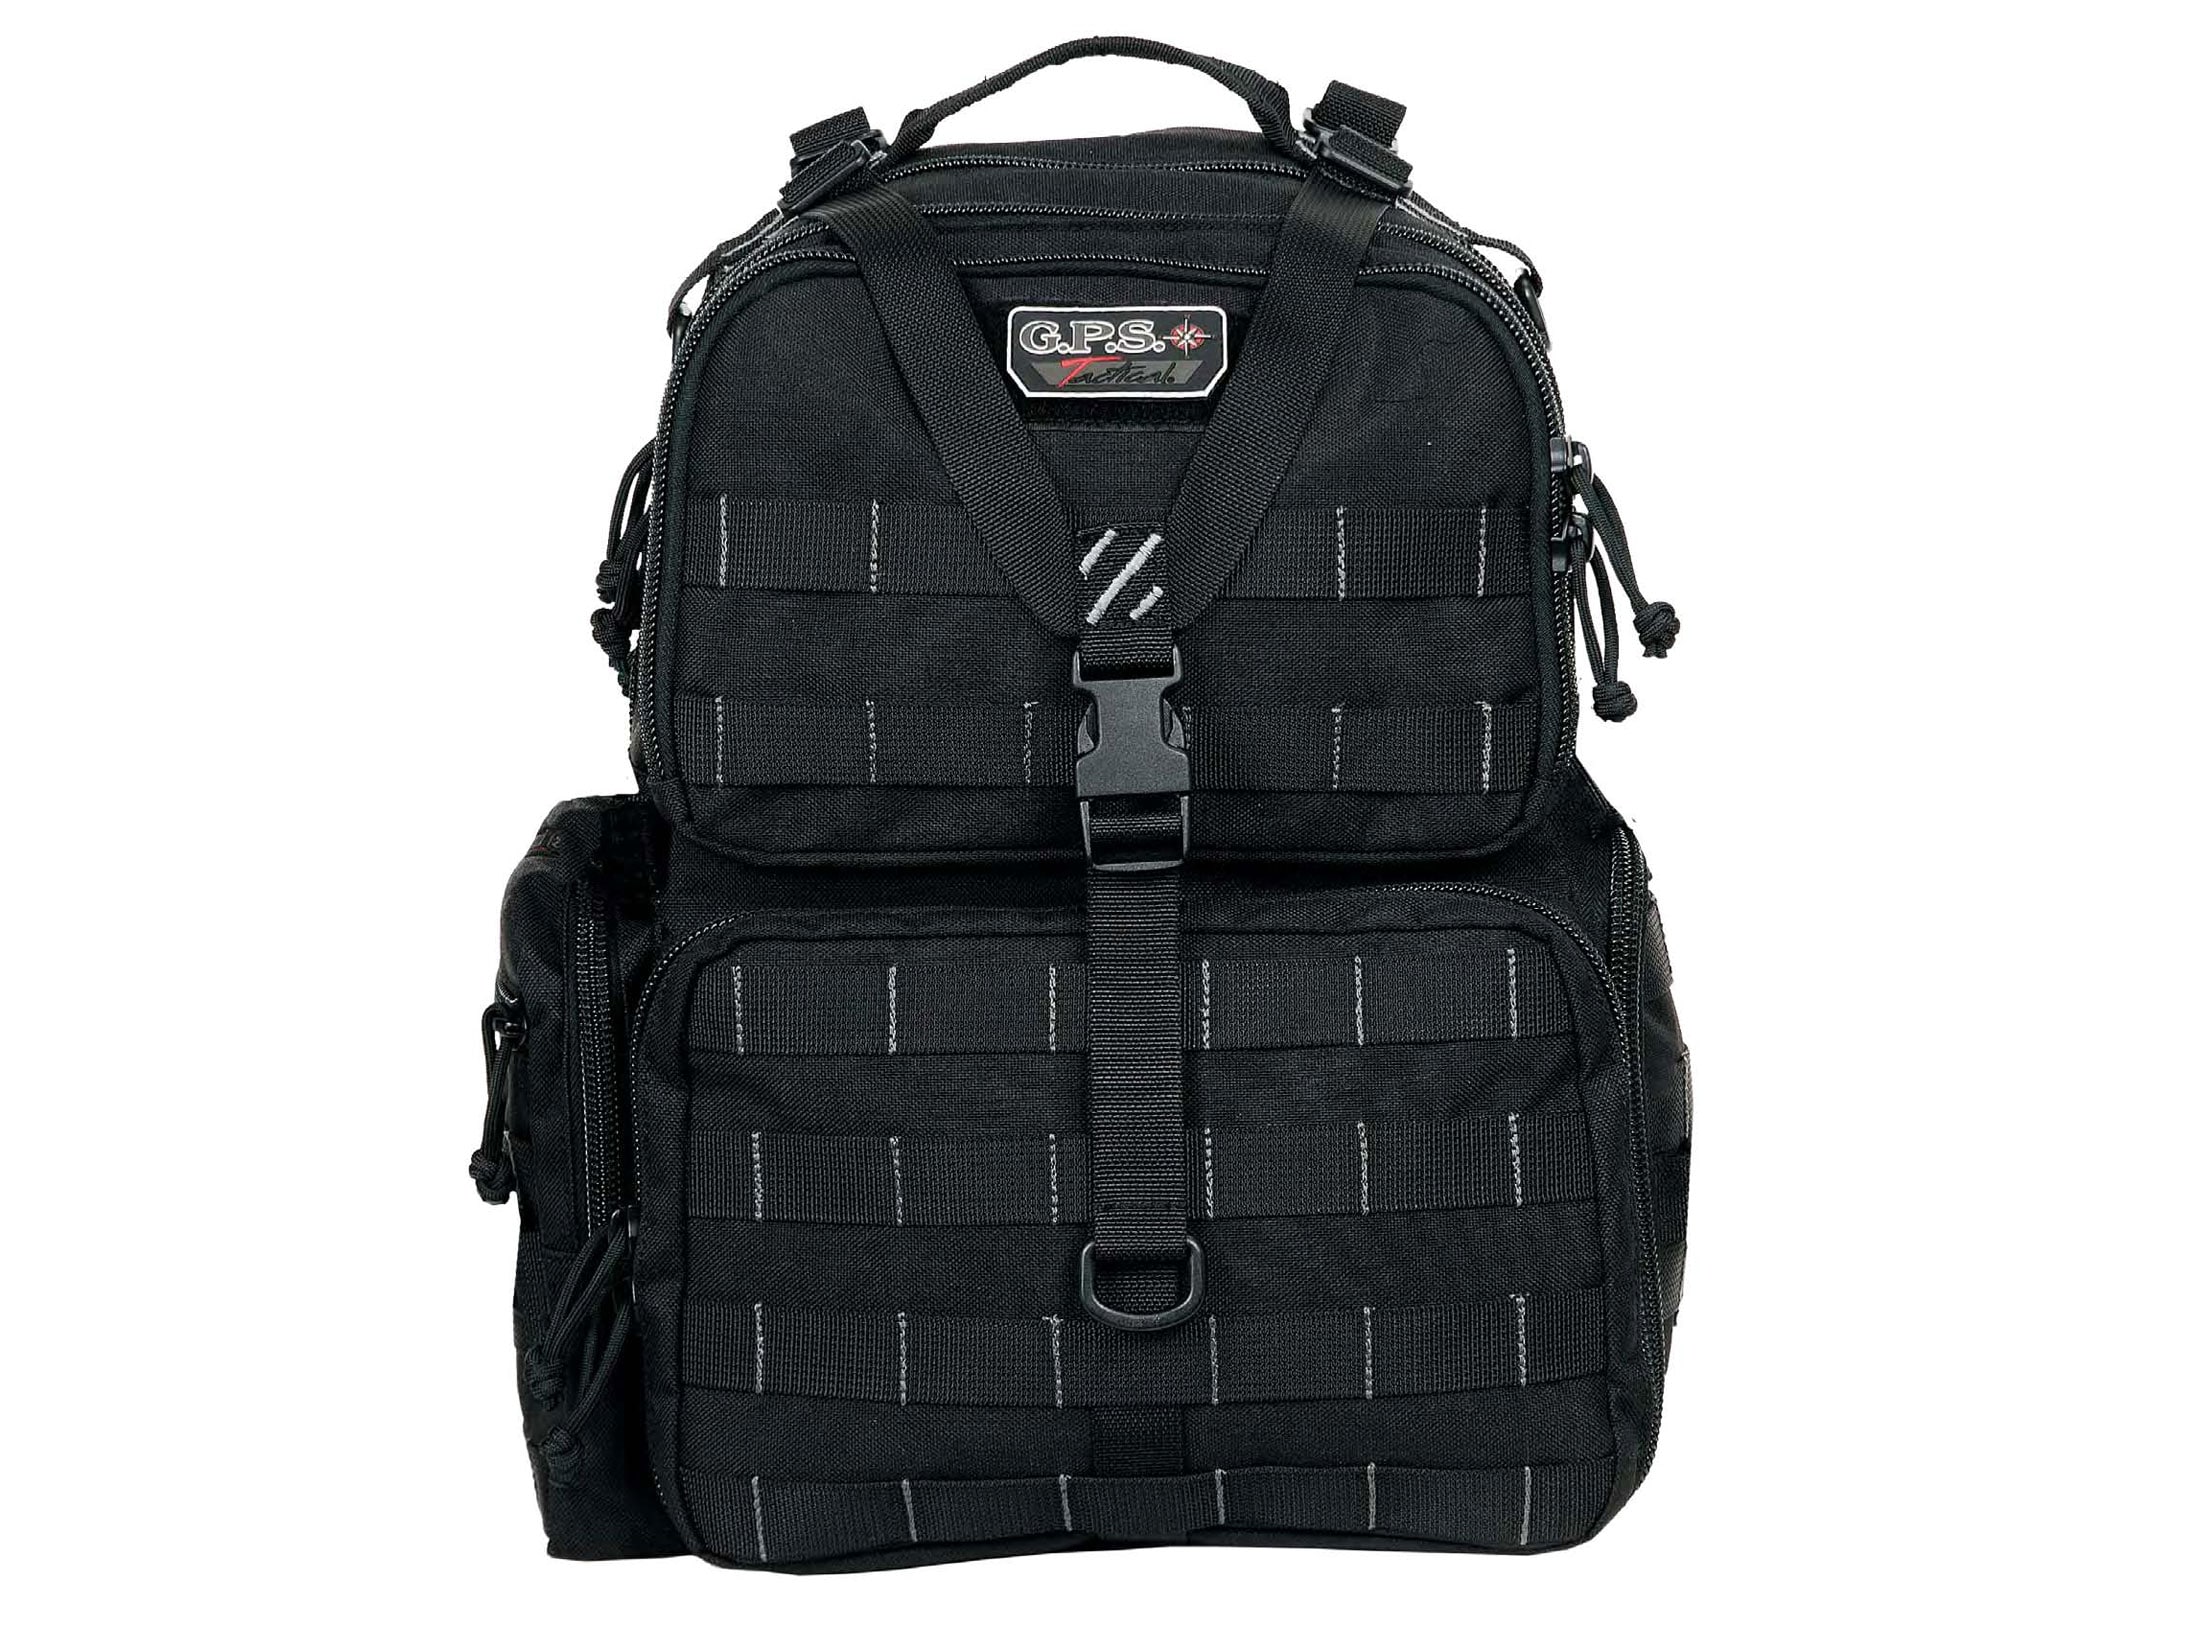 Tactical Range Backpack- Holds 2 Handguns